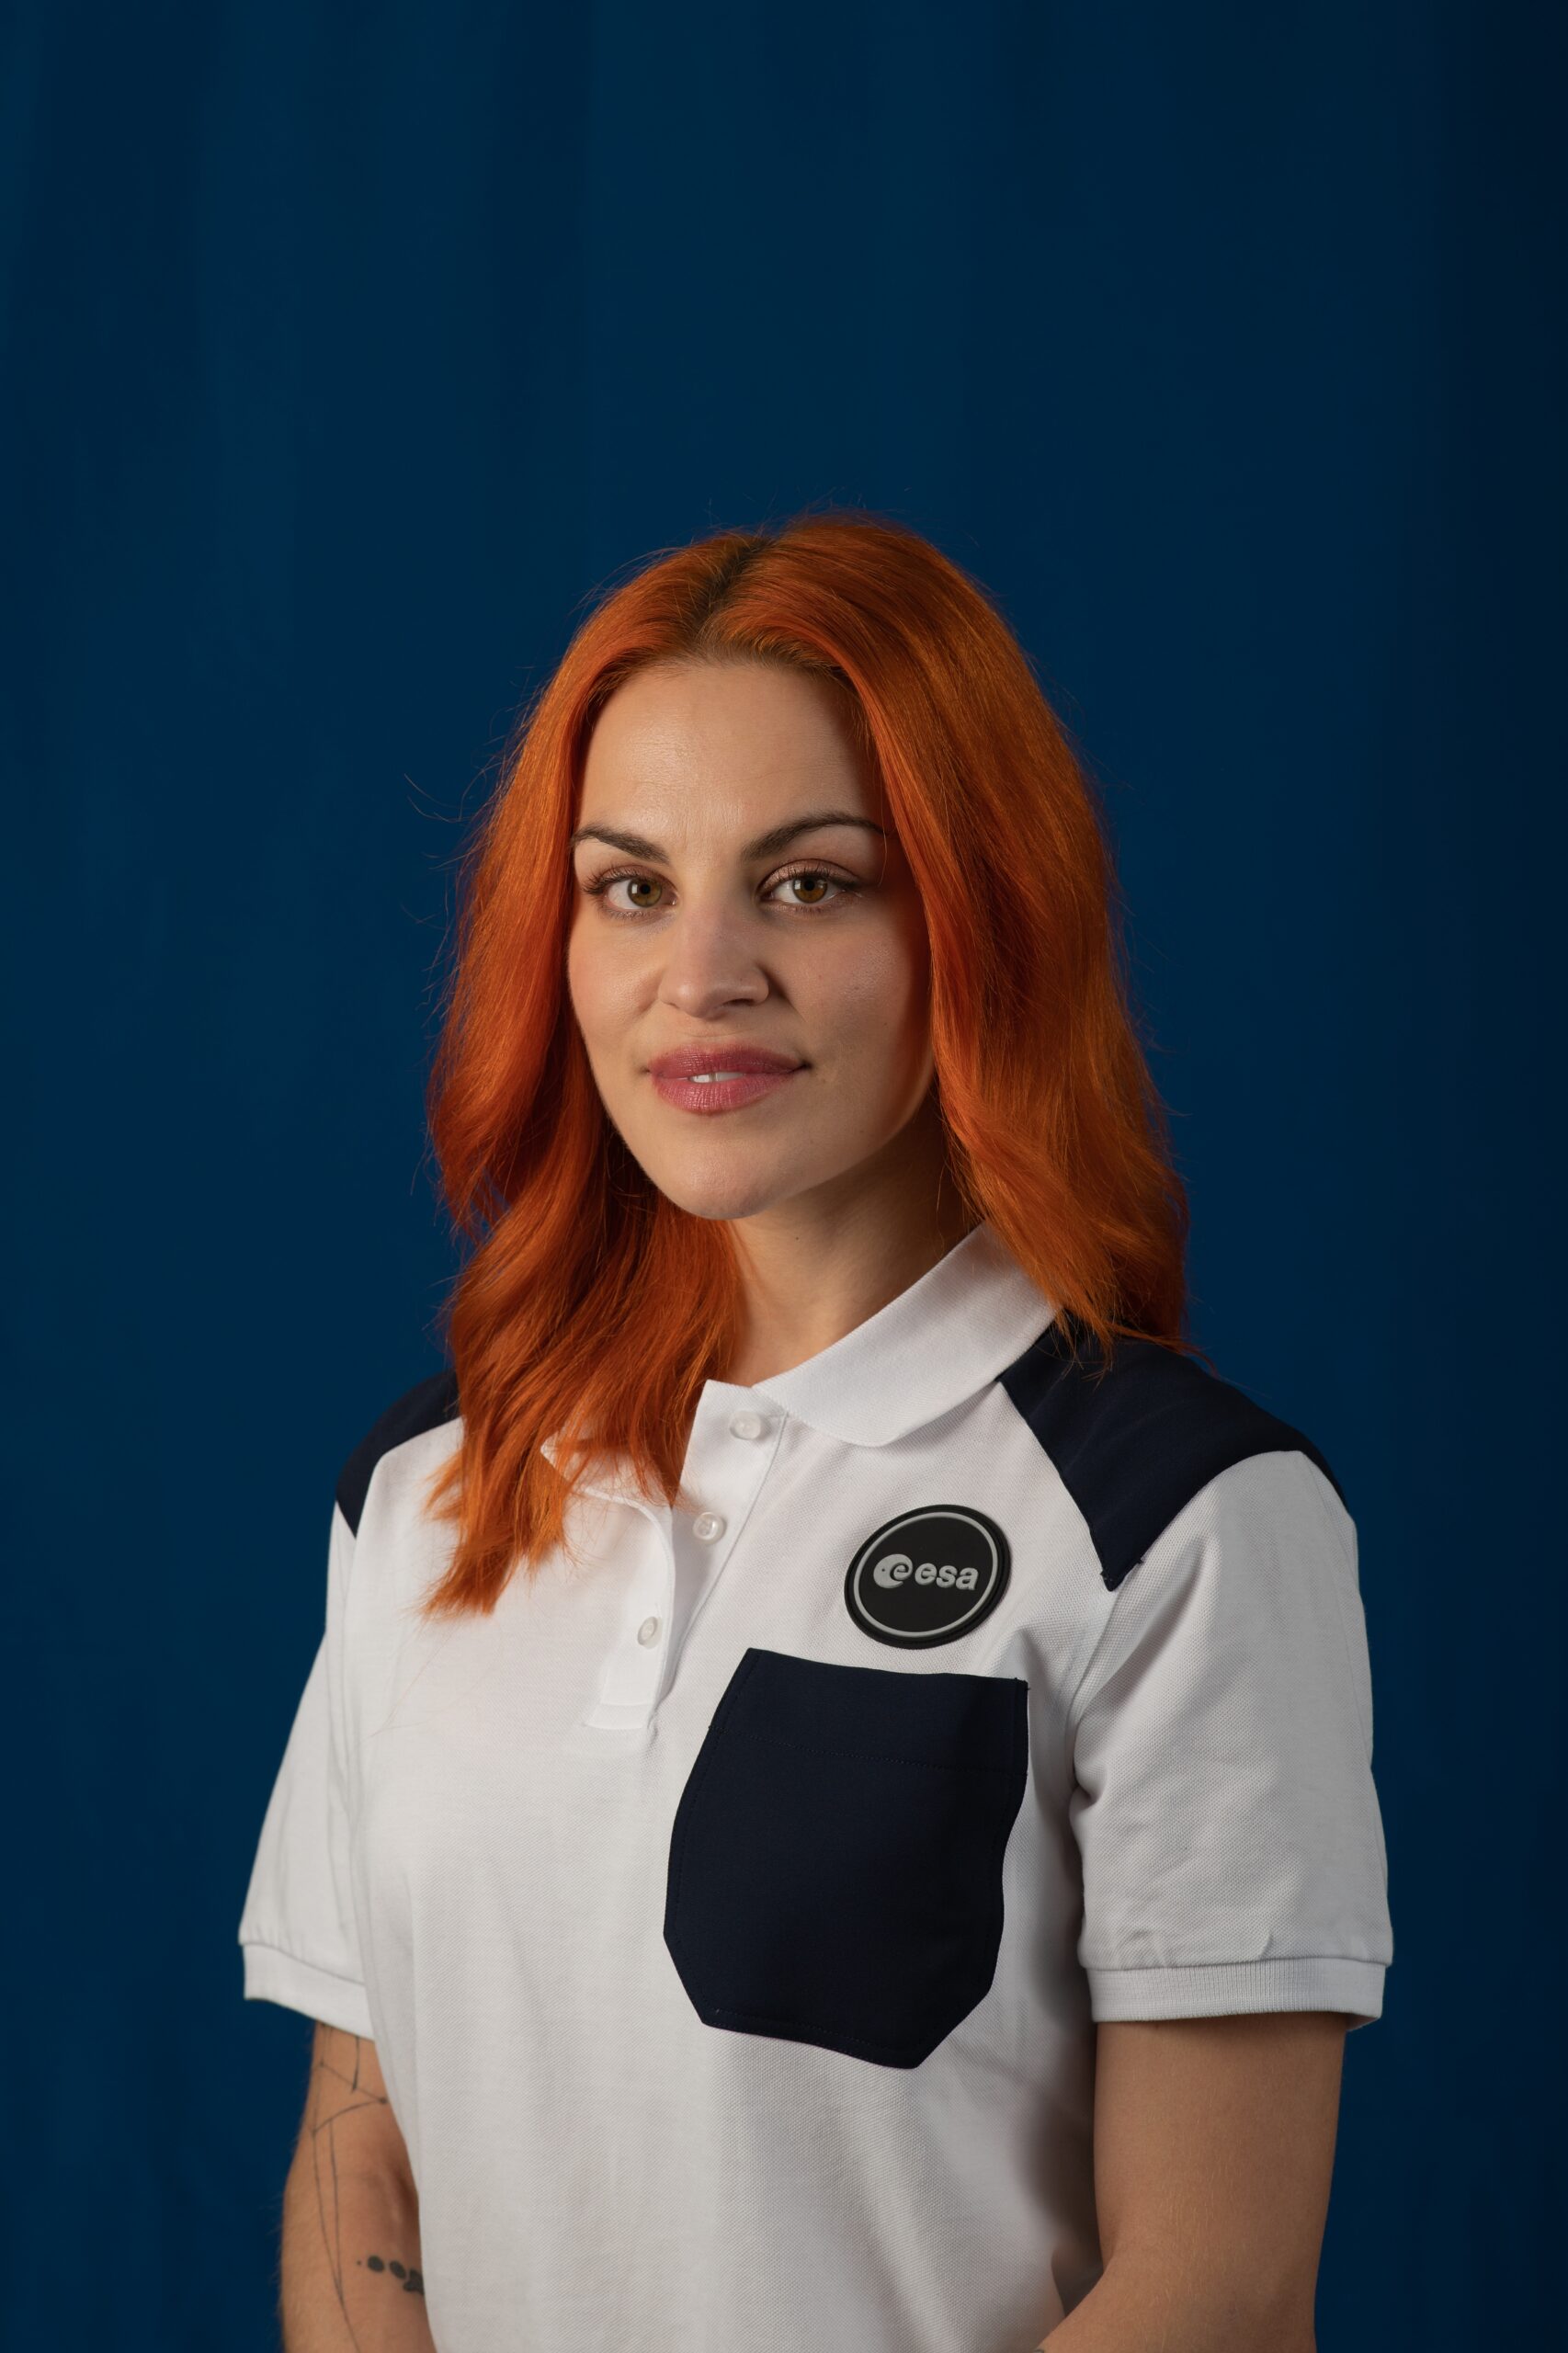 ESA Astronaut Class of 2022 Sara Garcia Alonso scaled